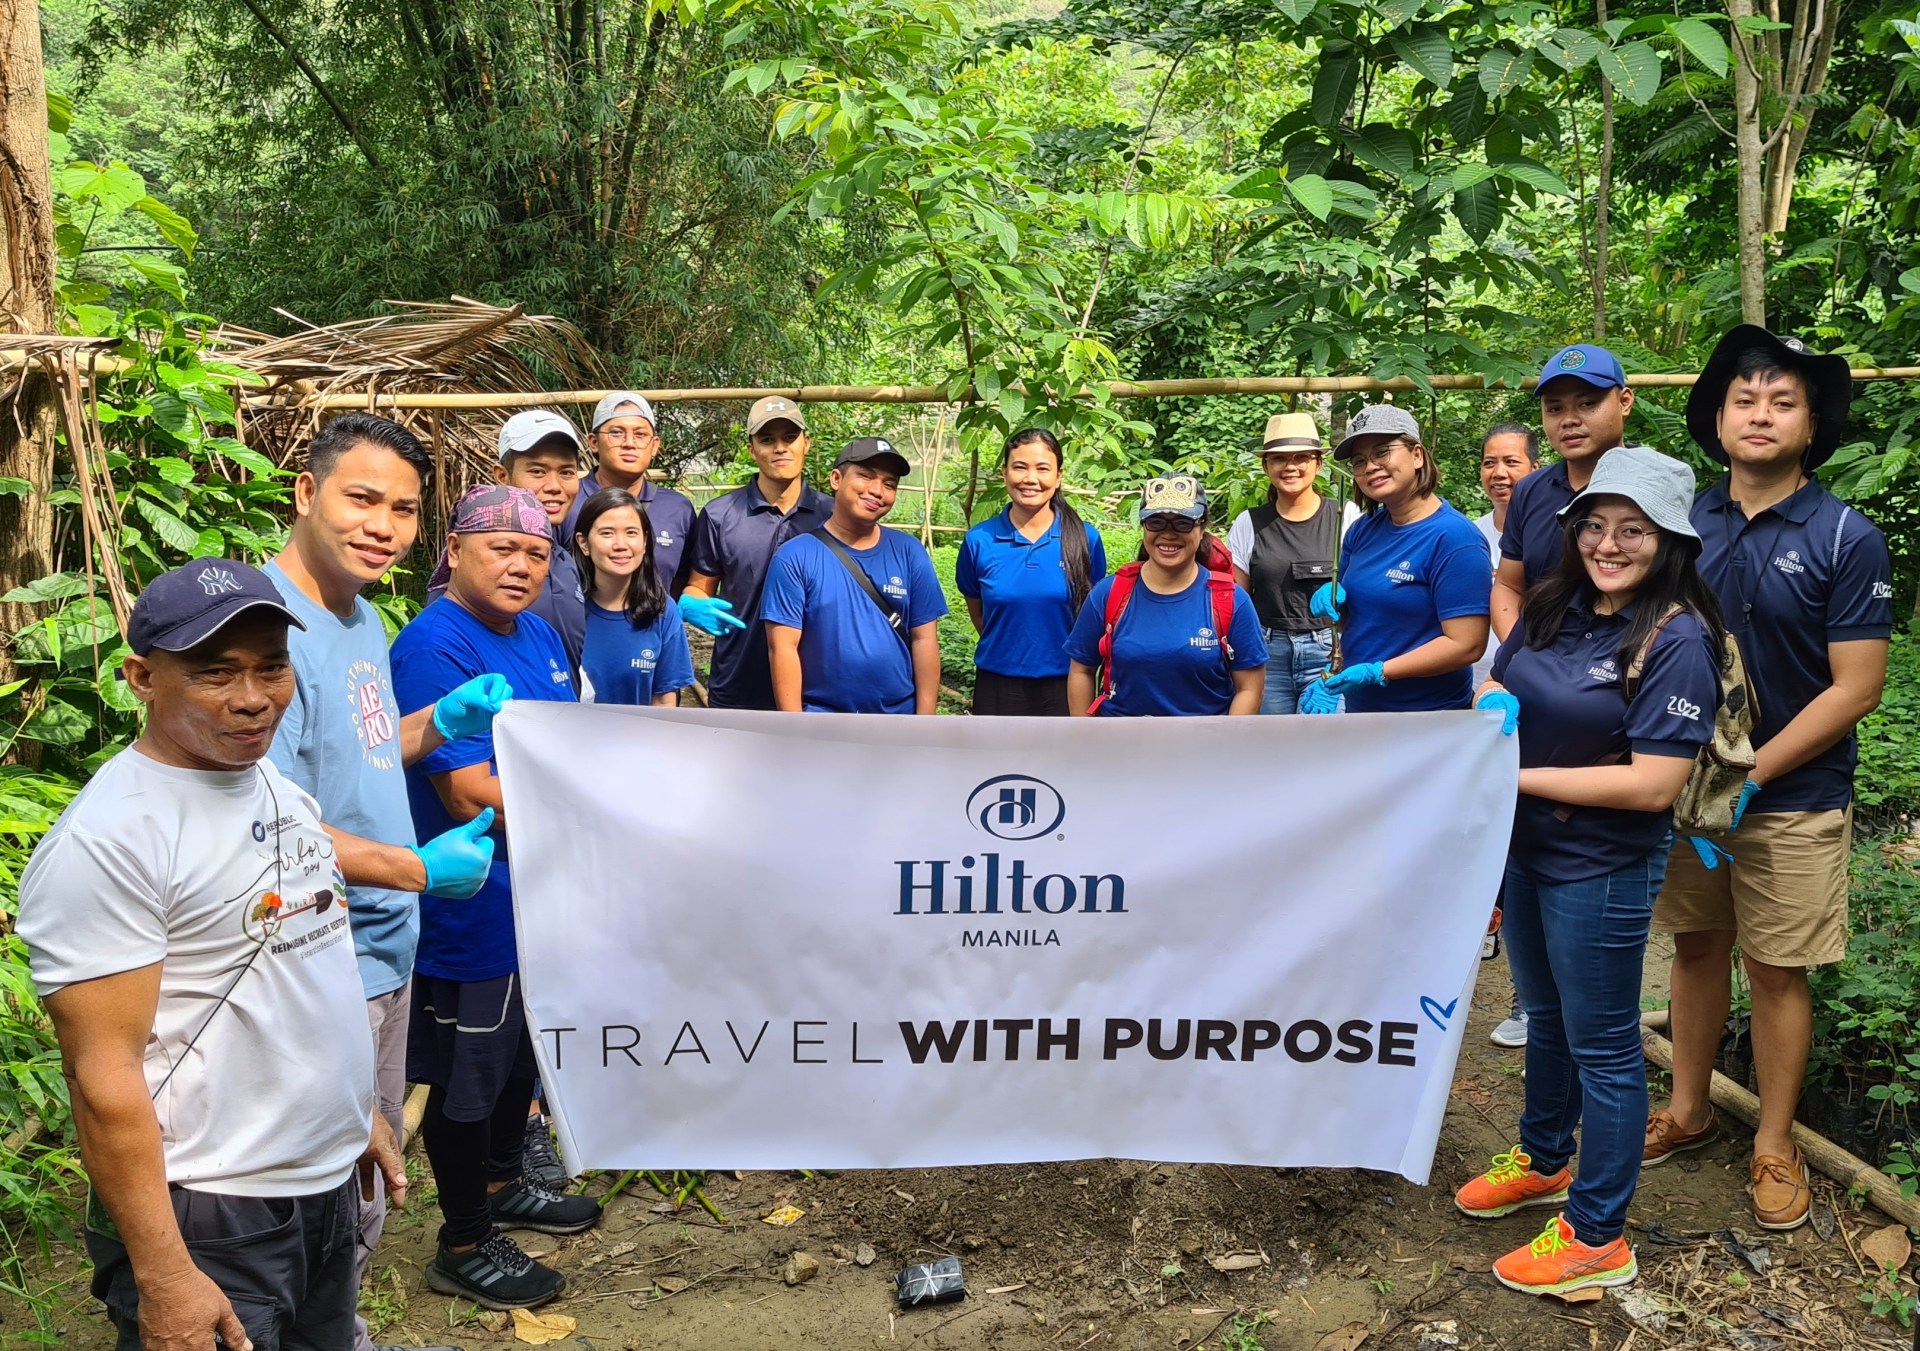 Hilton Manila team members holding Travel with Purpose banner